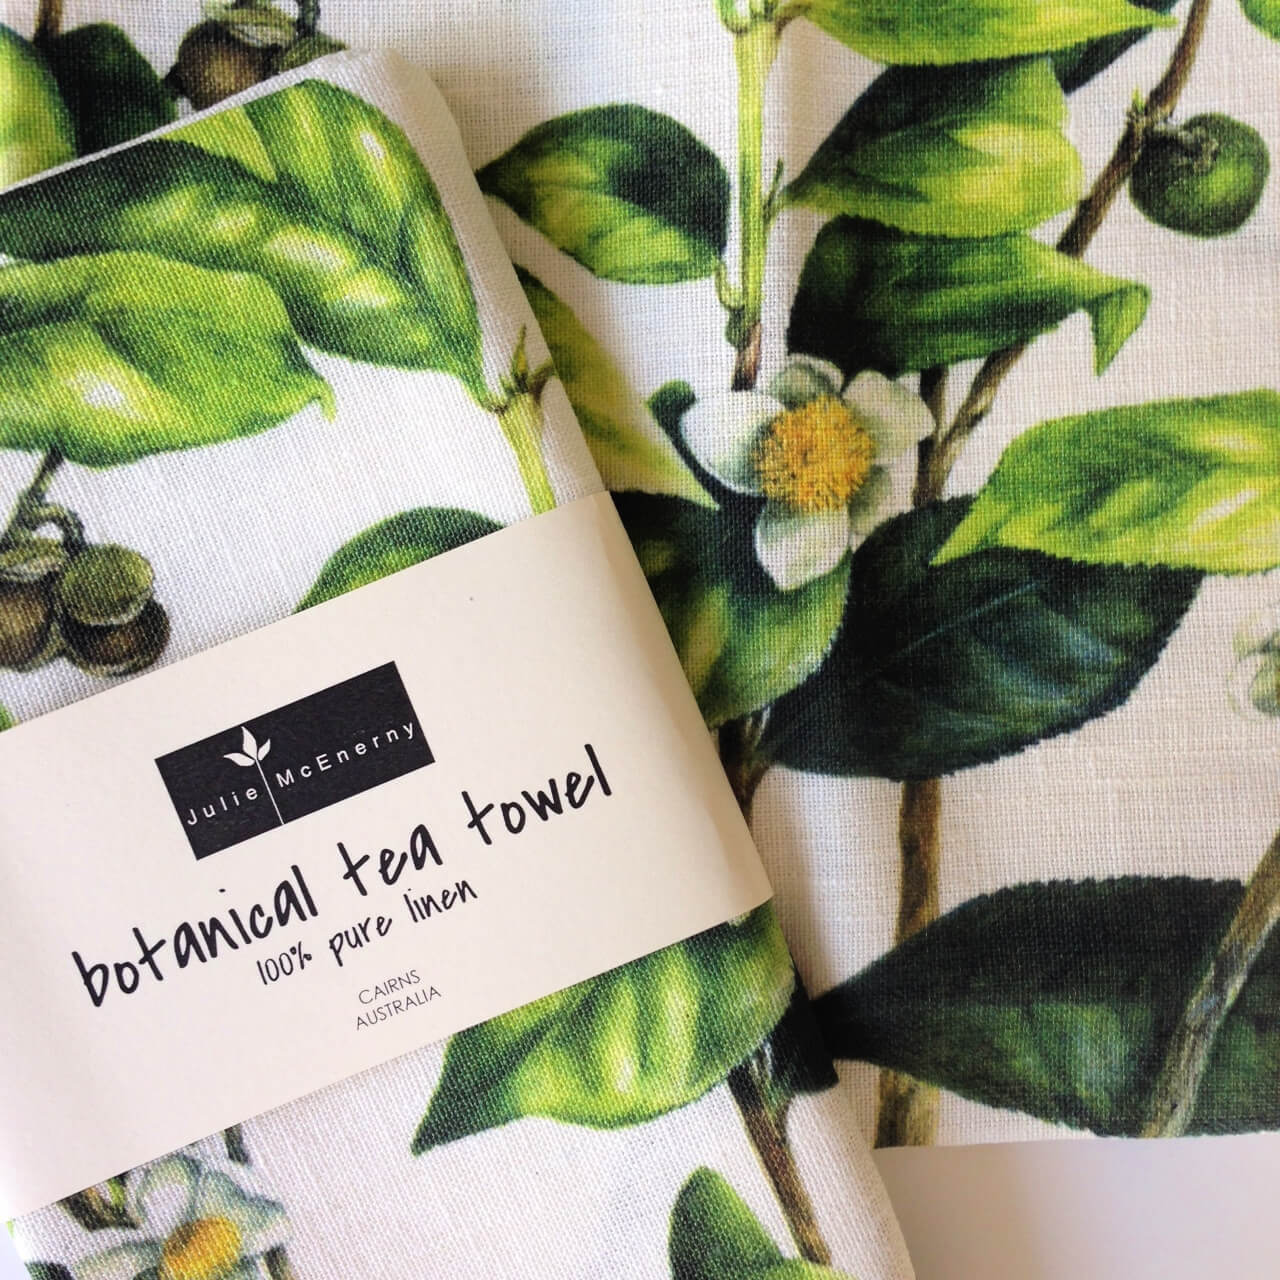 100% Pure Linen Tea Towel with Botanical Print Artwork of Tea Plant Camellia sinensis